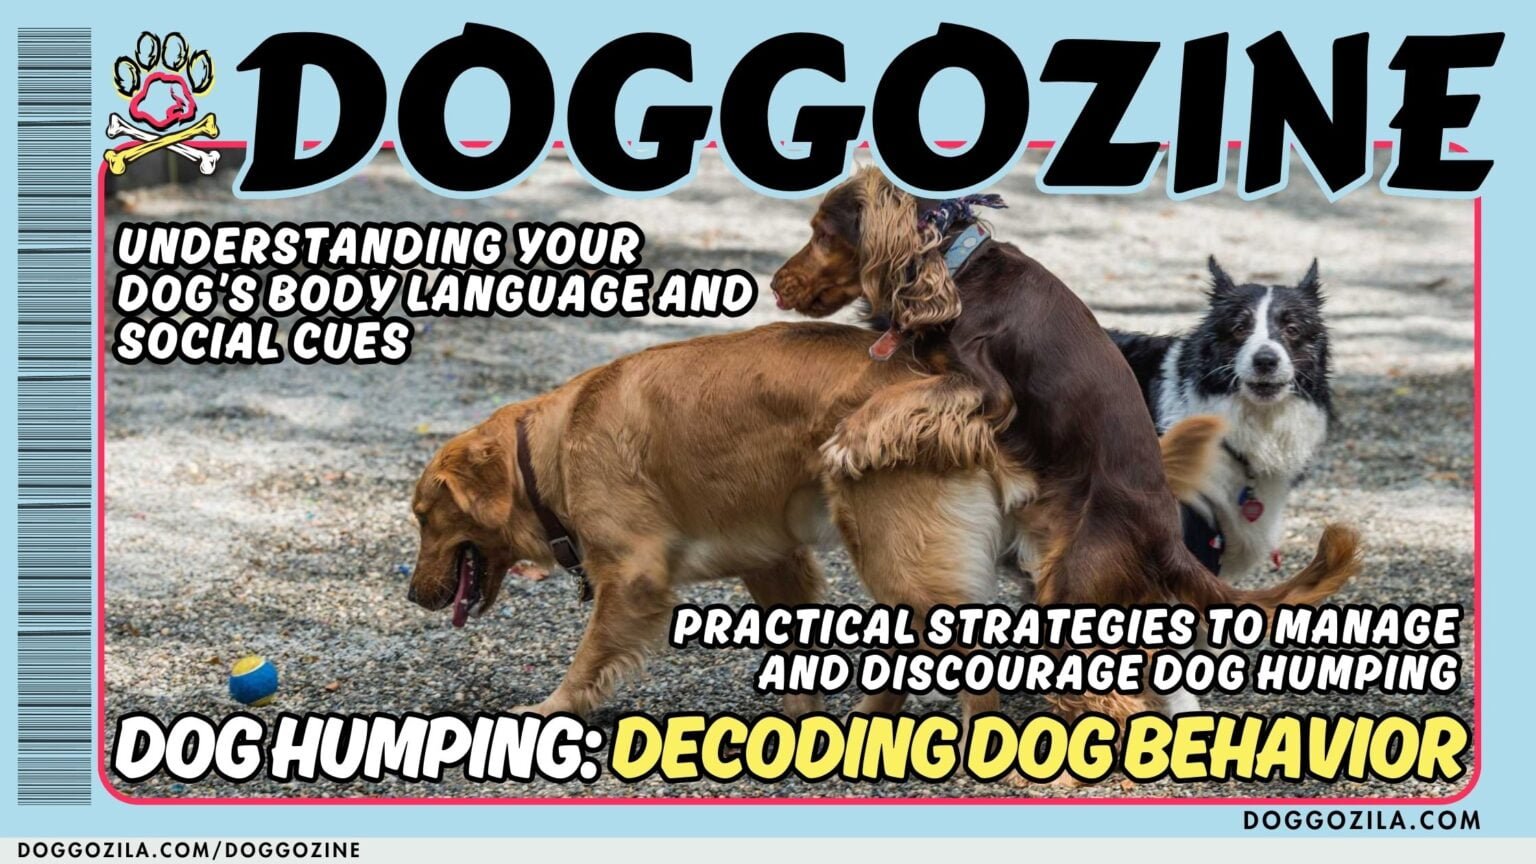 magazine for dogs doggozine